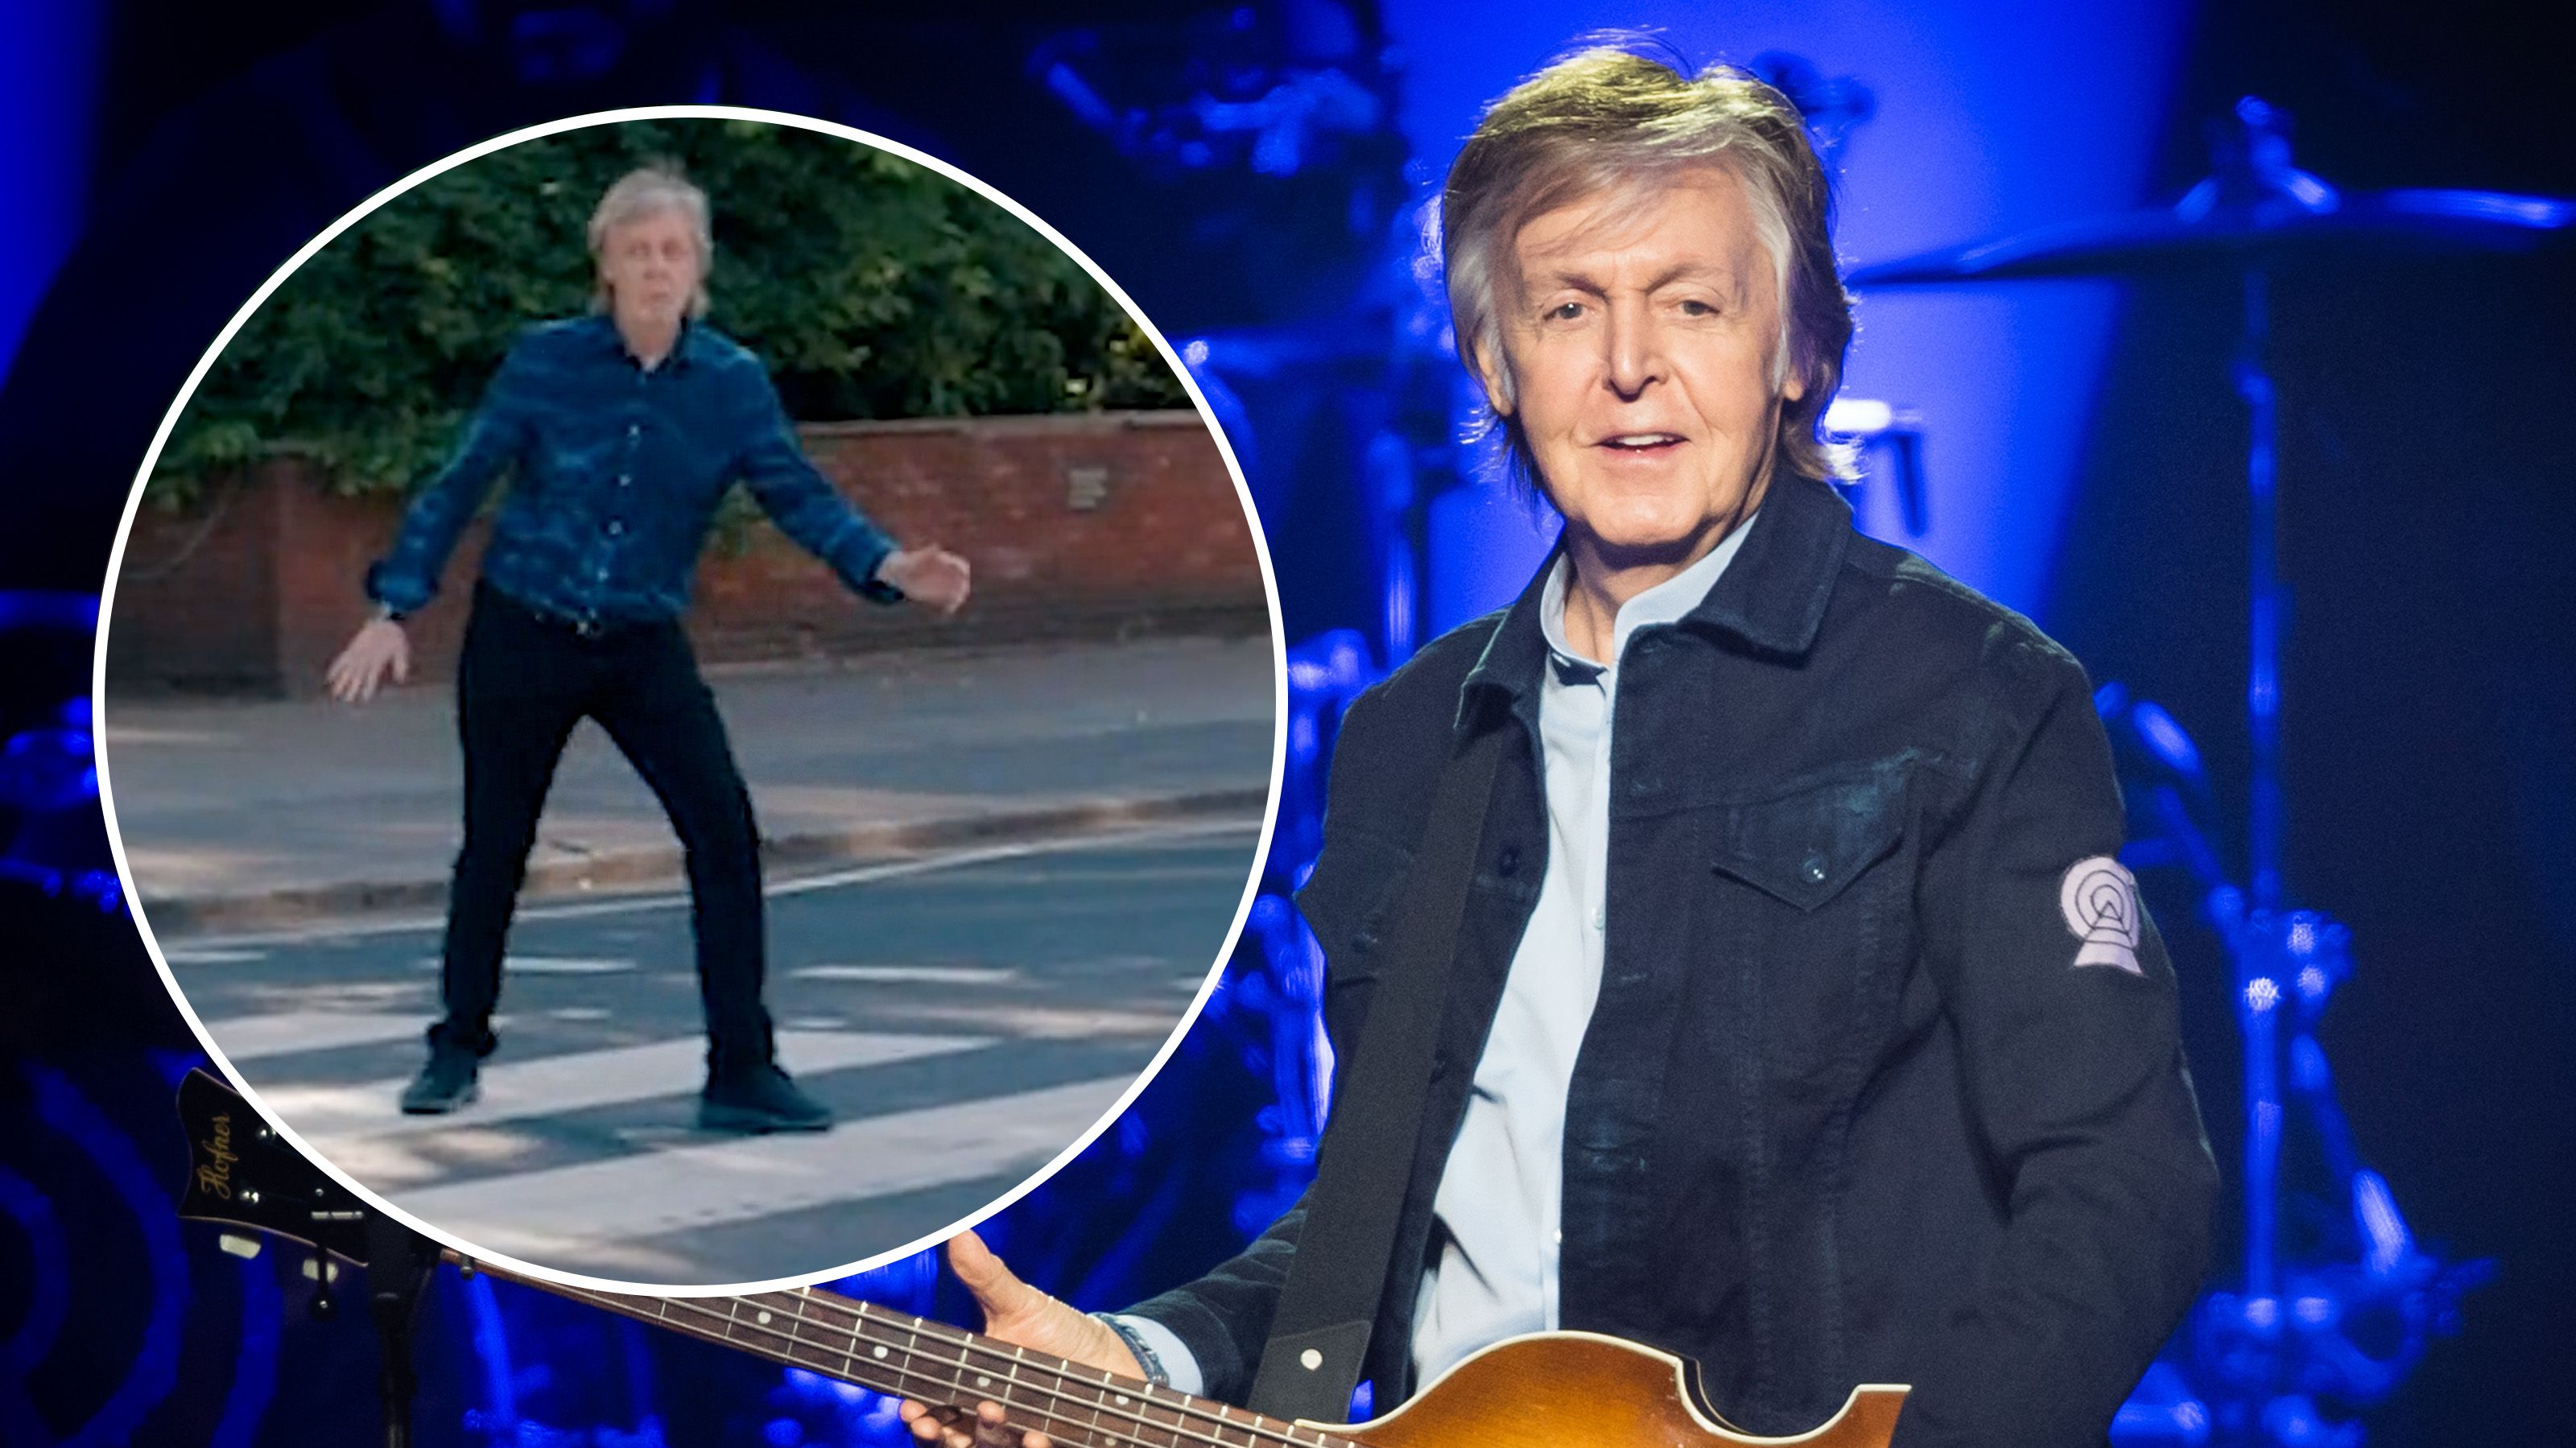 Paul McCartney has near accident recreating iconic Beatles photo